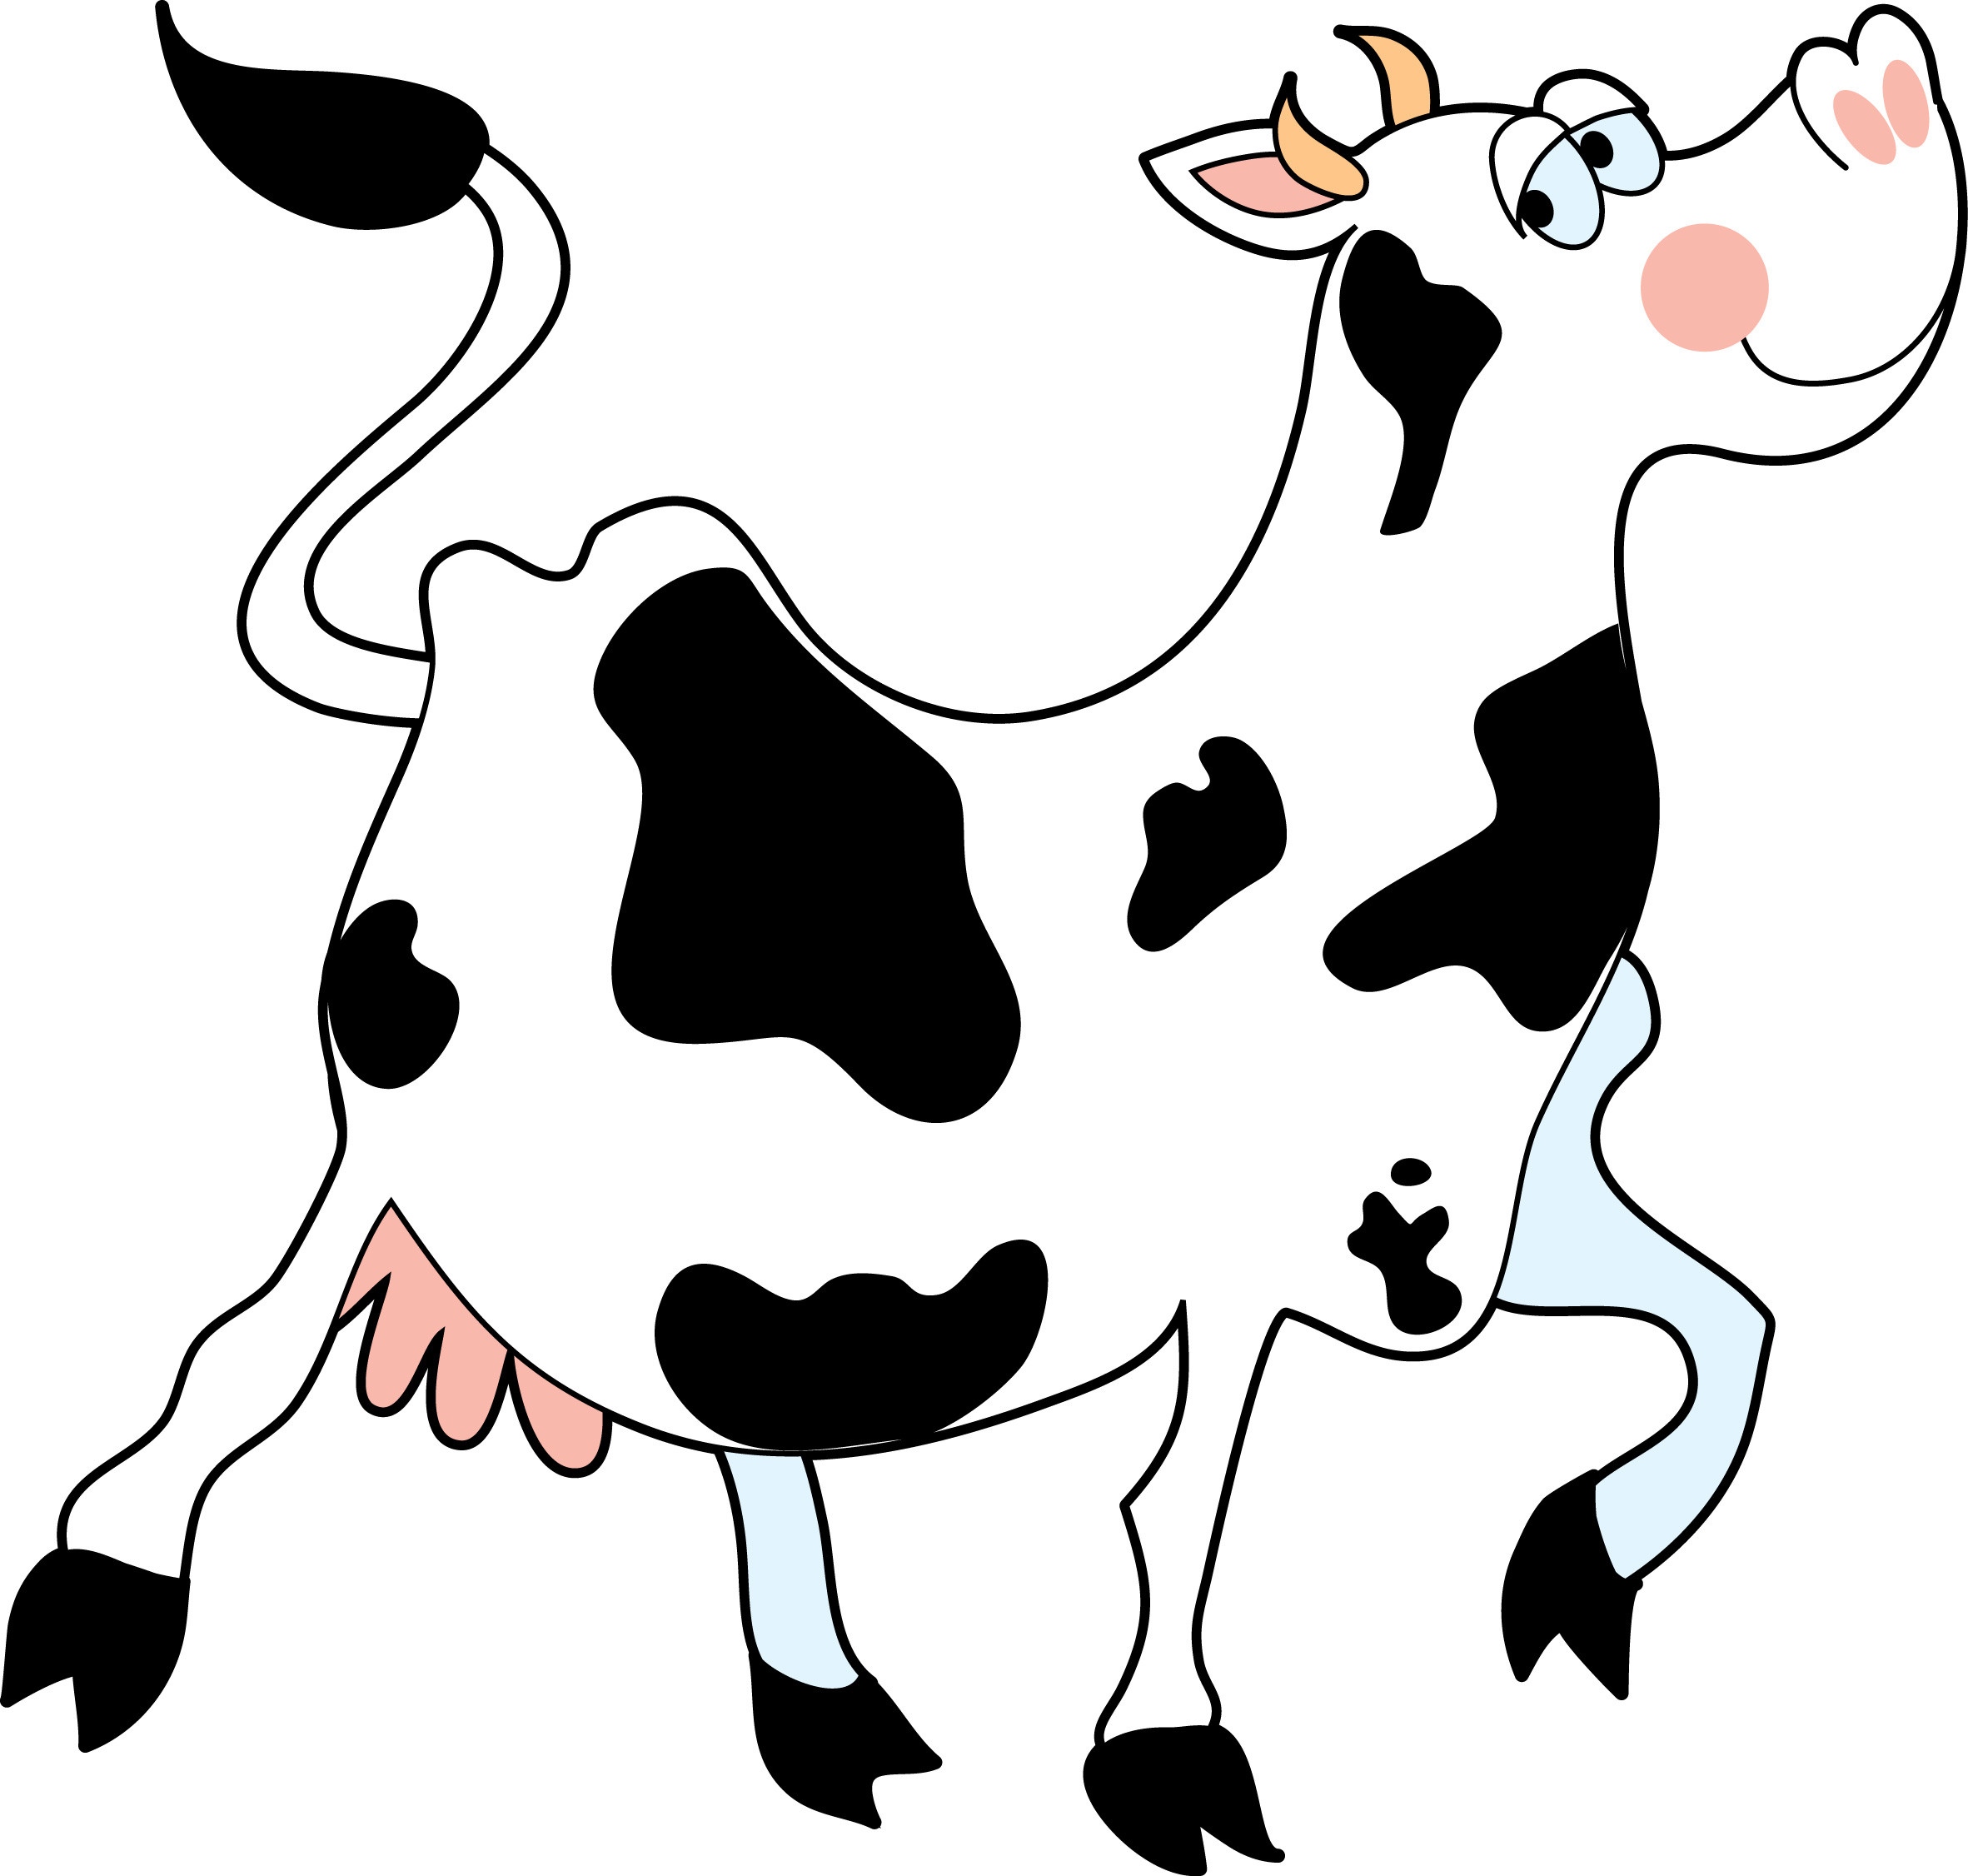 Cow clip art images free clipart images 3 clipartcow 2